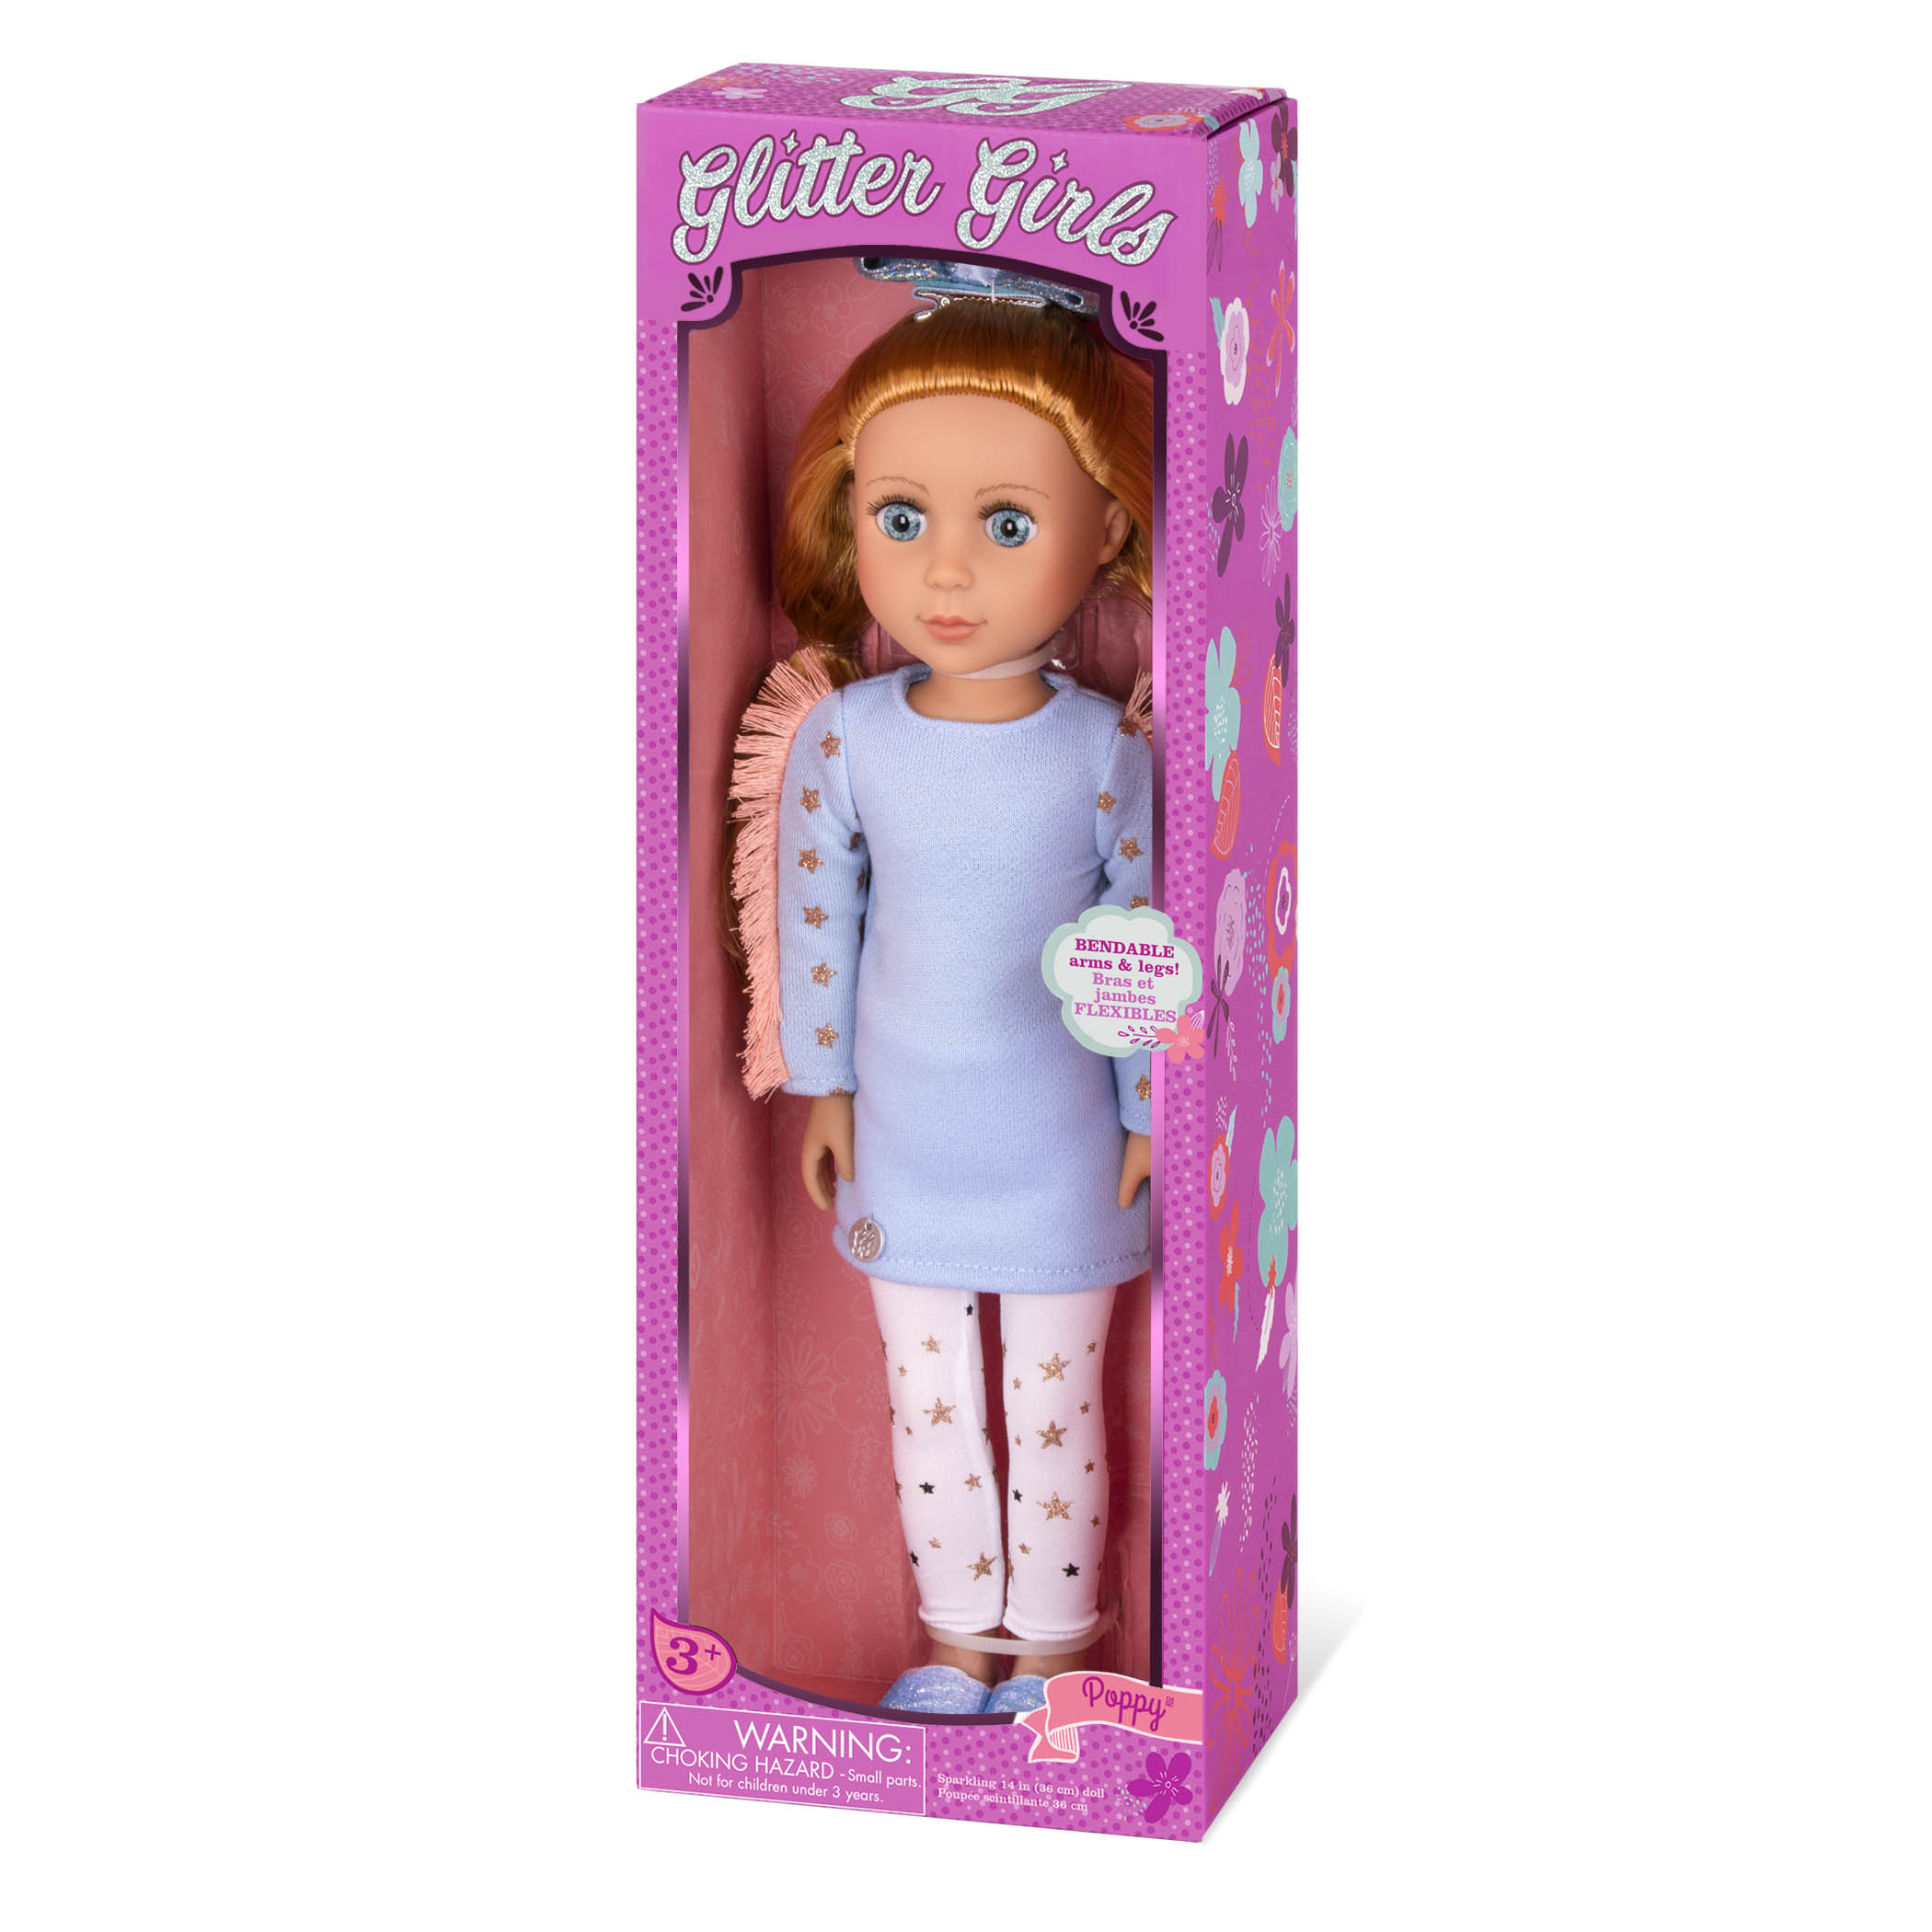  Glitter Girls Lacy 14 Inch Doll Wearing Pink Tunic